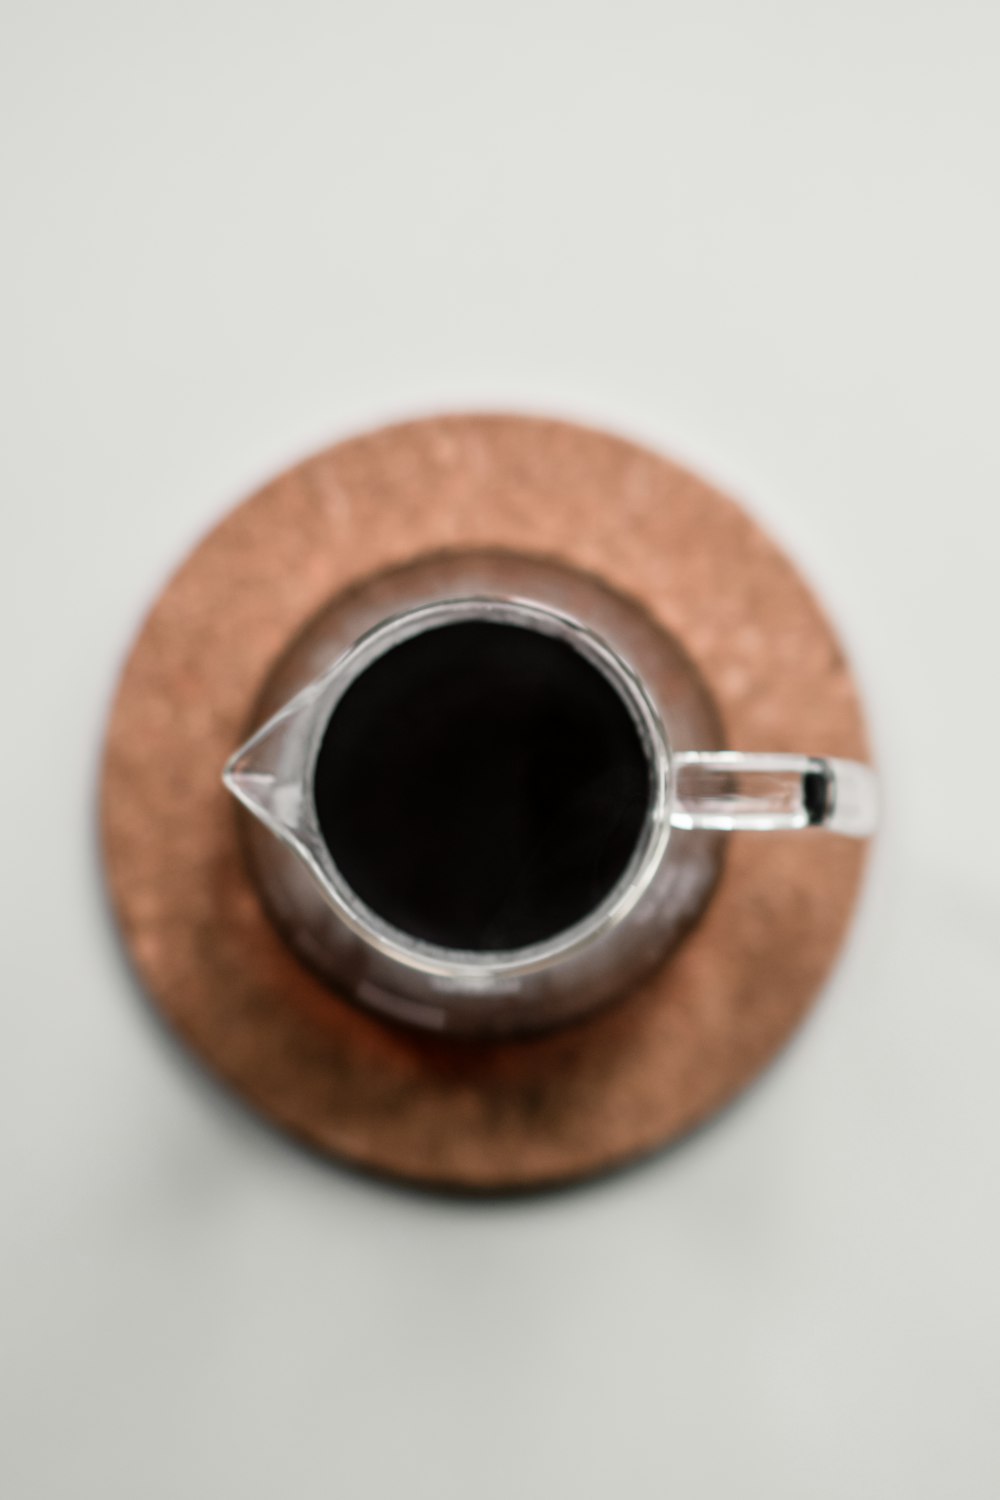 black coffee in brown ceramic mug on brown wooden round table